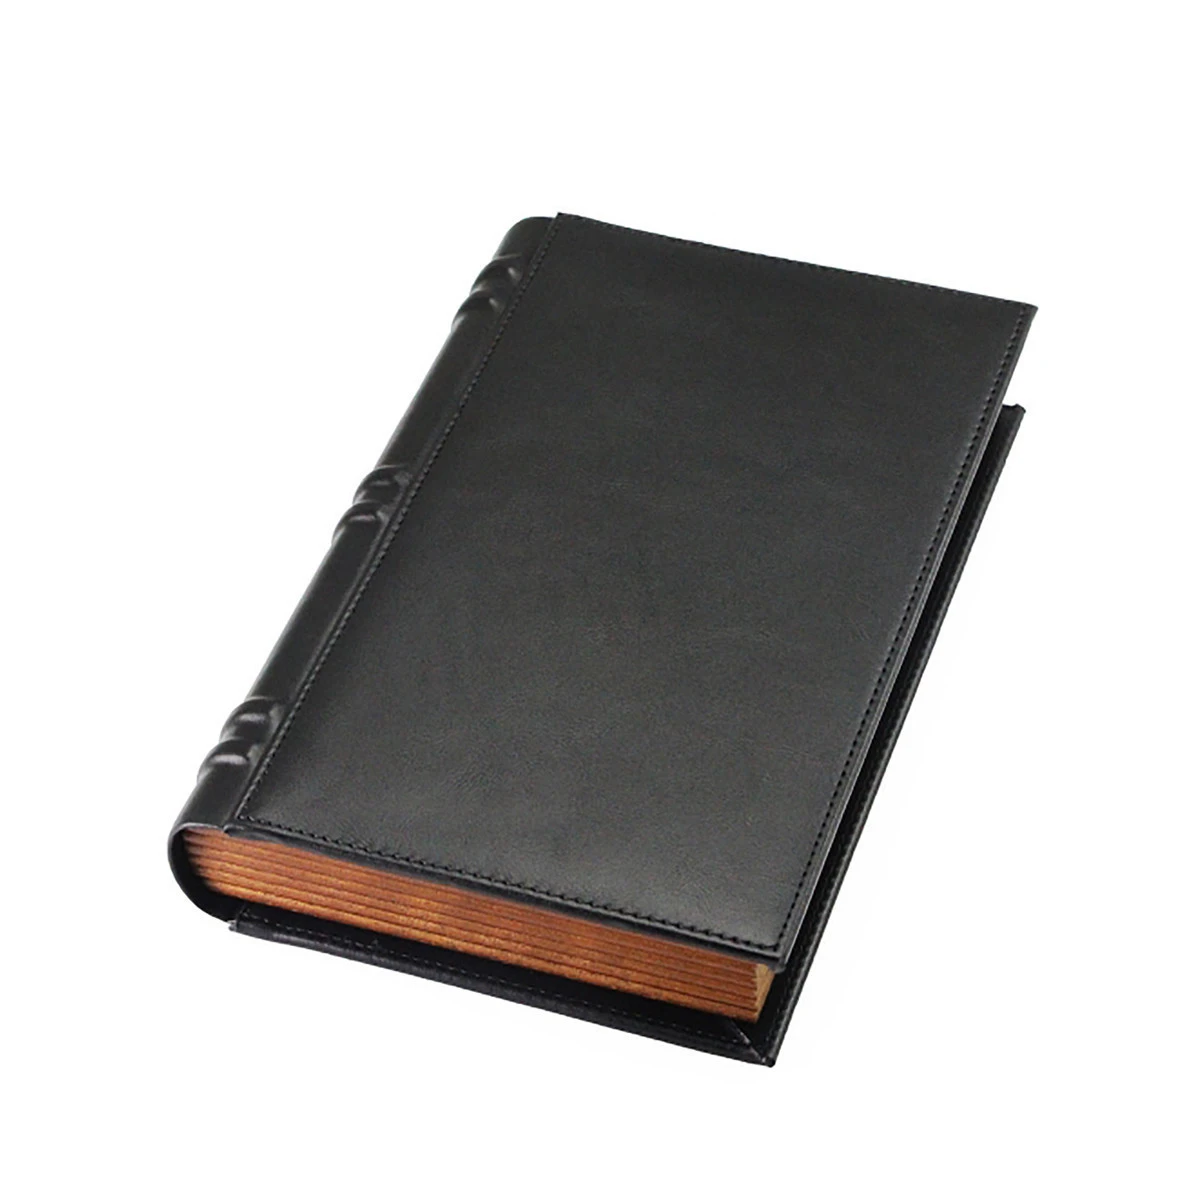 Book Shape Leather Cigar Case blackTravel Humidor Portable Cigar Box